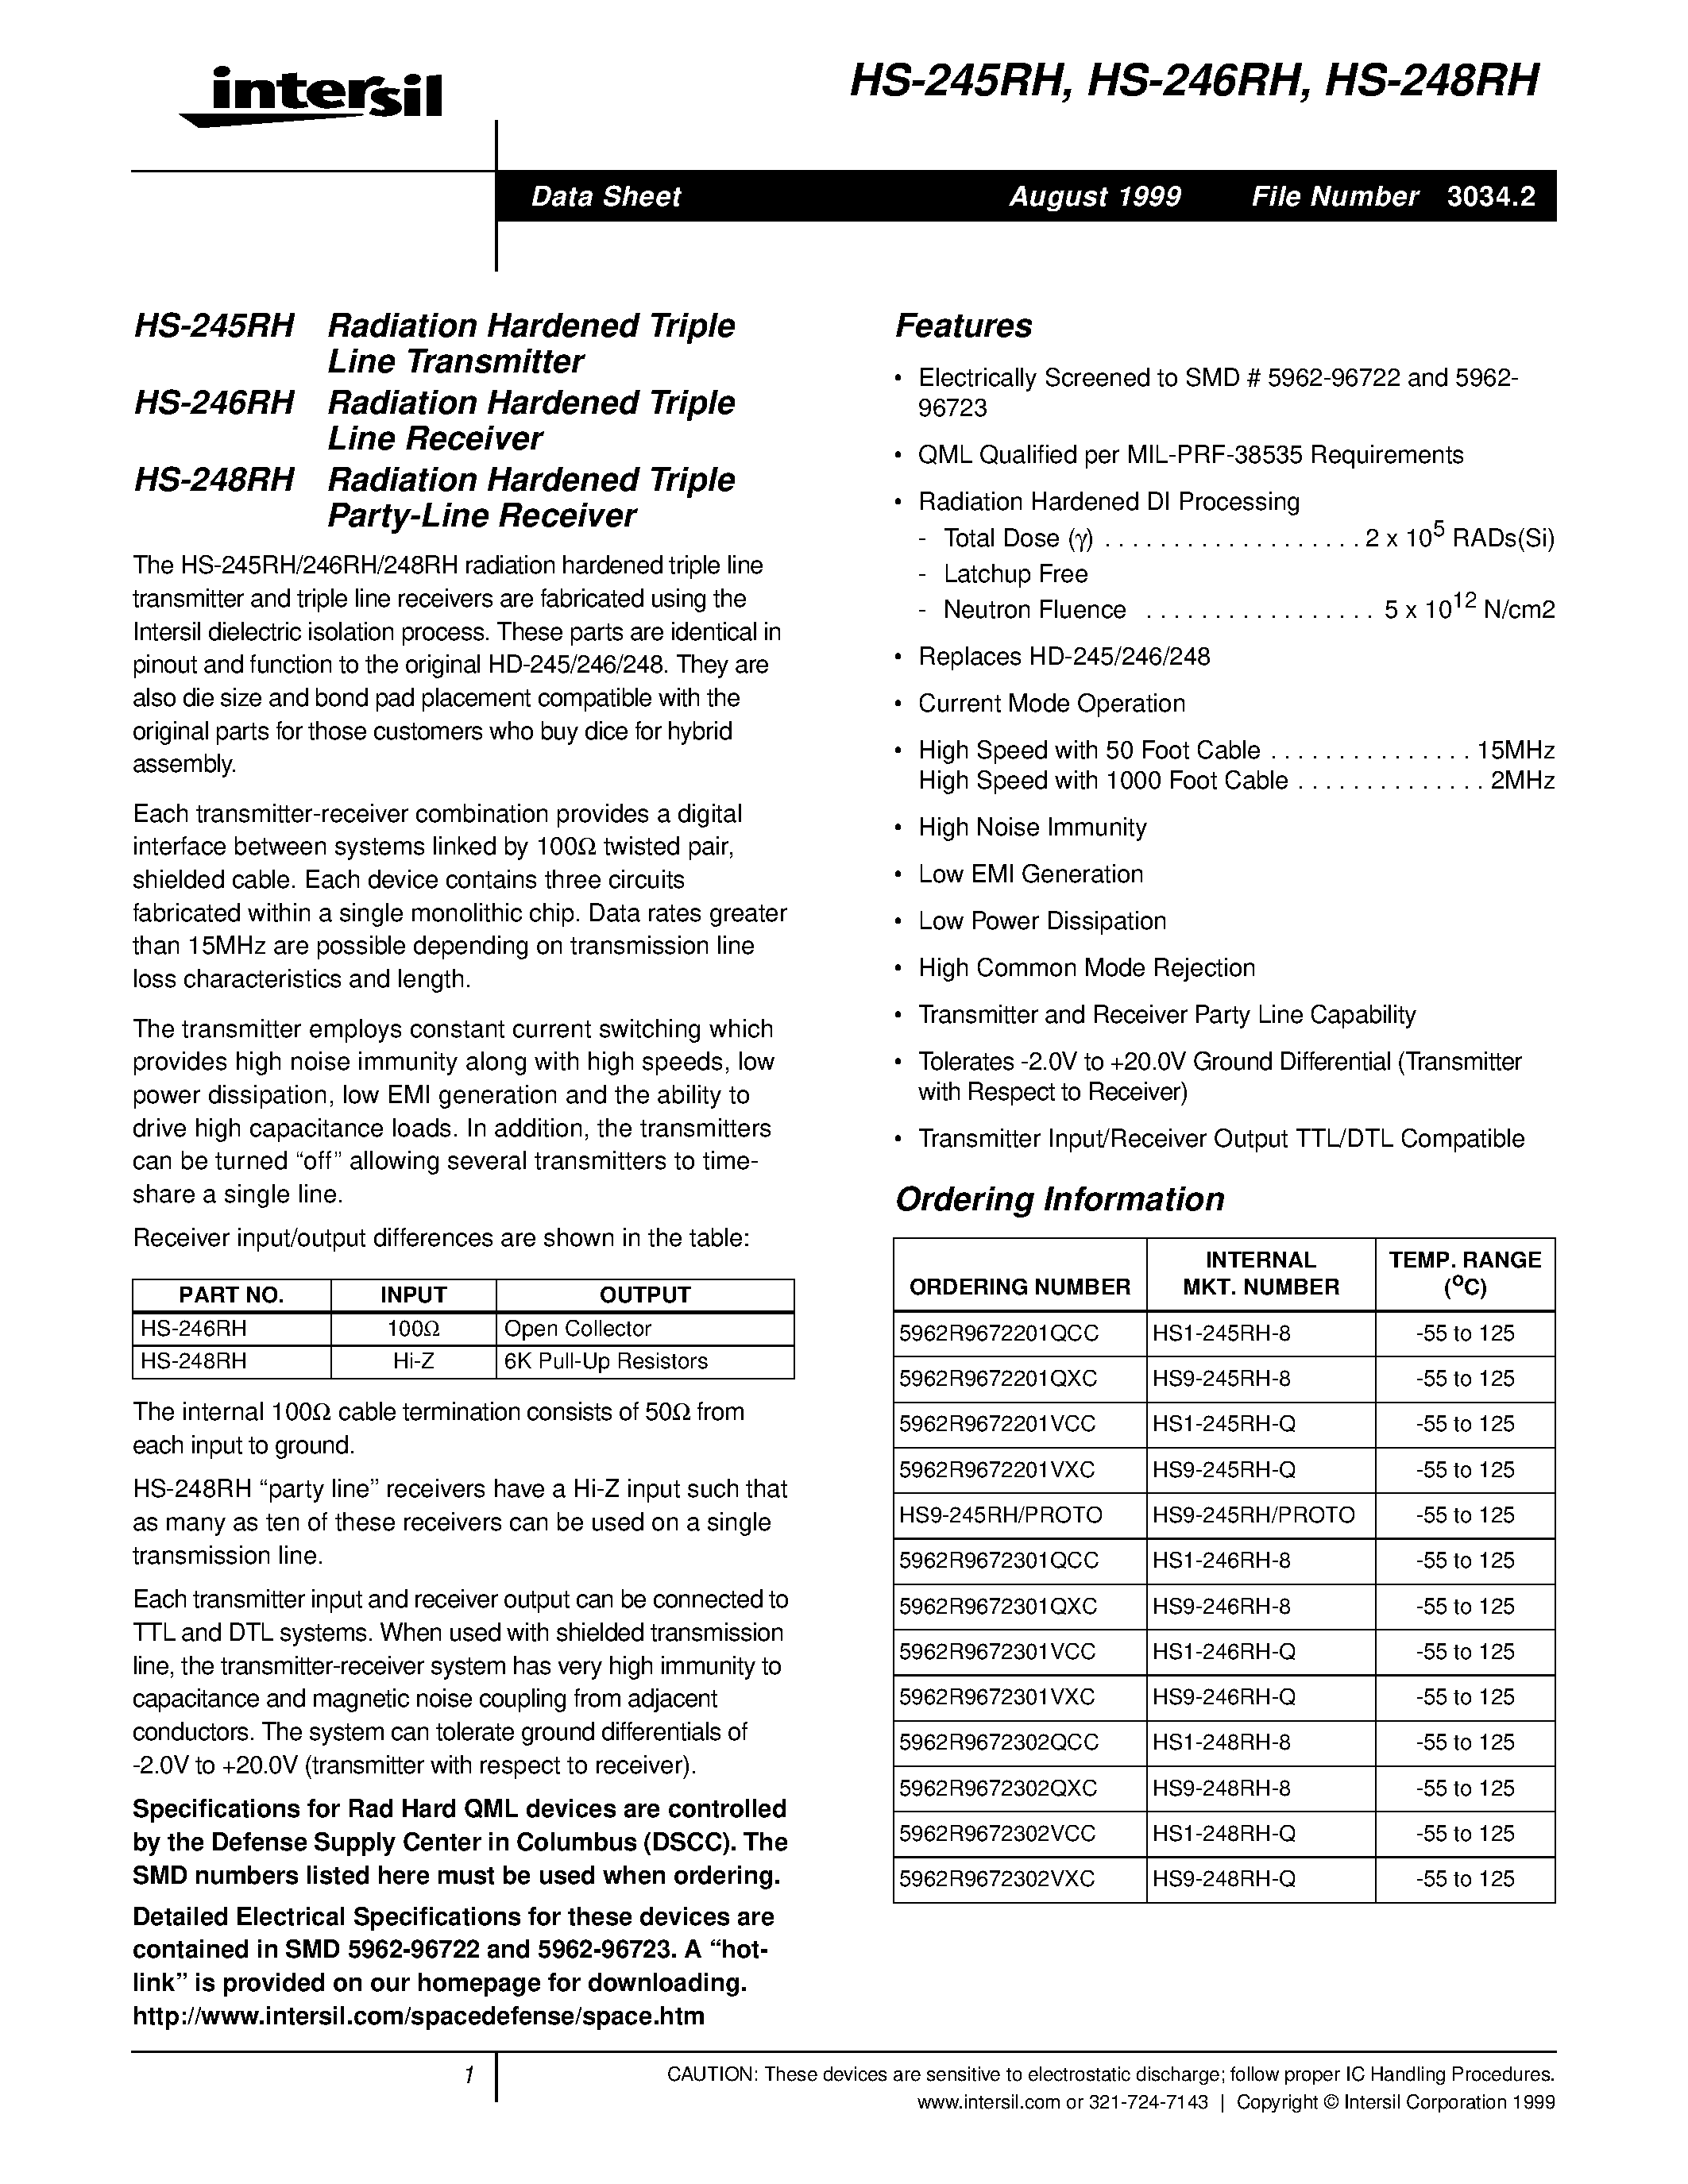 Datasheet HS1-246RH-Q - Radiation Hardened Triple Line(party-Line) Transmitter page 1